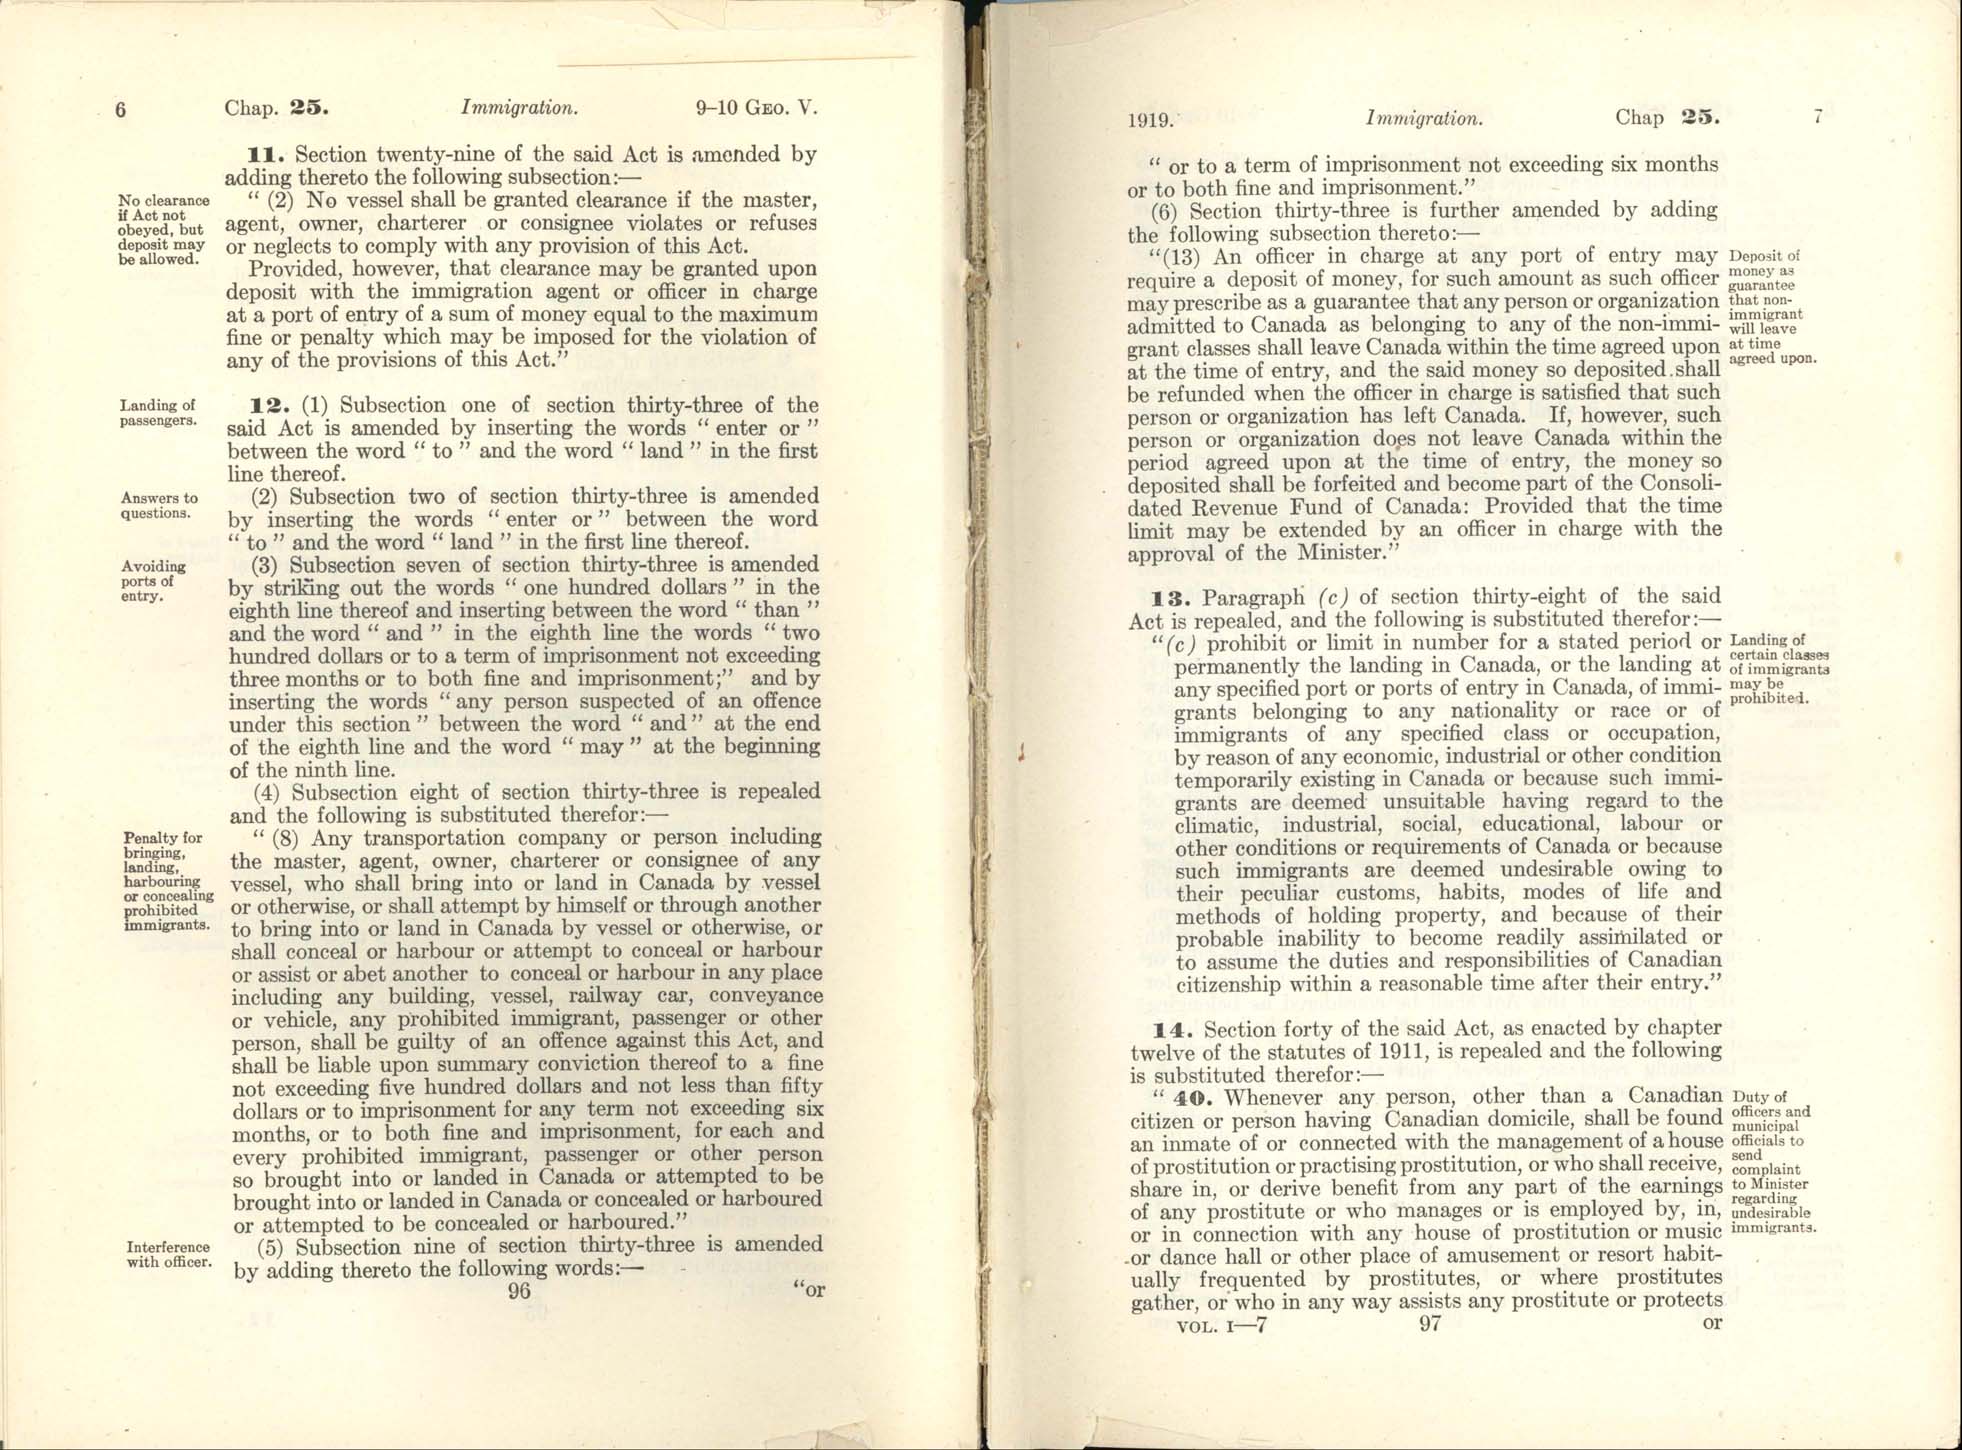 Page 96, 97 Immigration Act Amendment, 1919